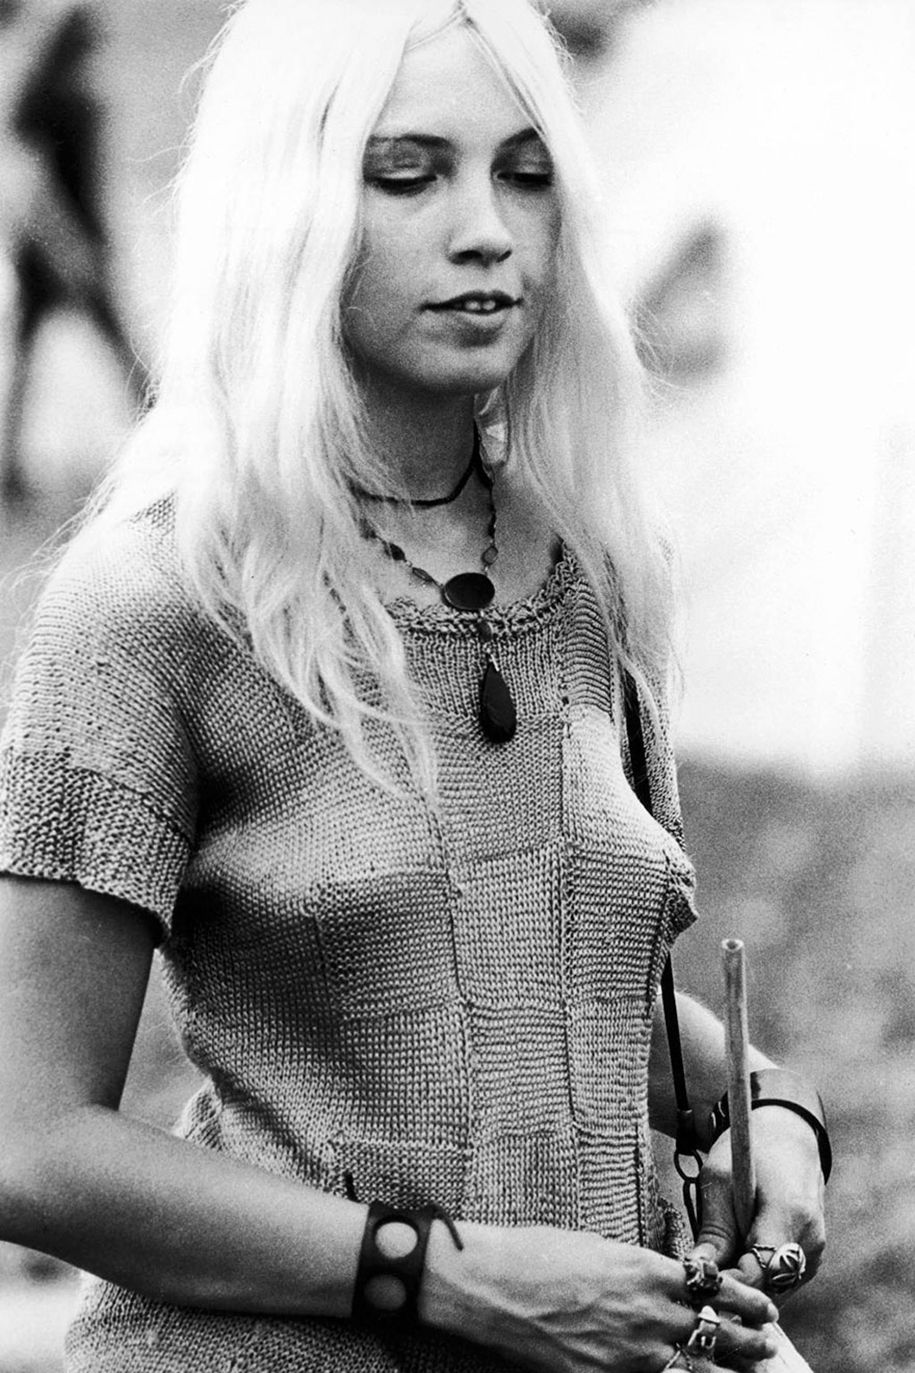 moda-damska-lat 60-tych-woodstock-1969-8